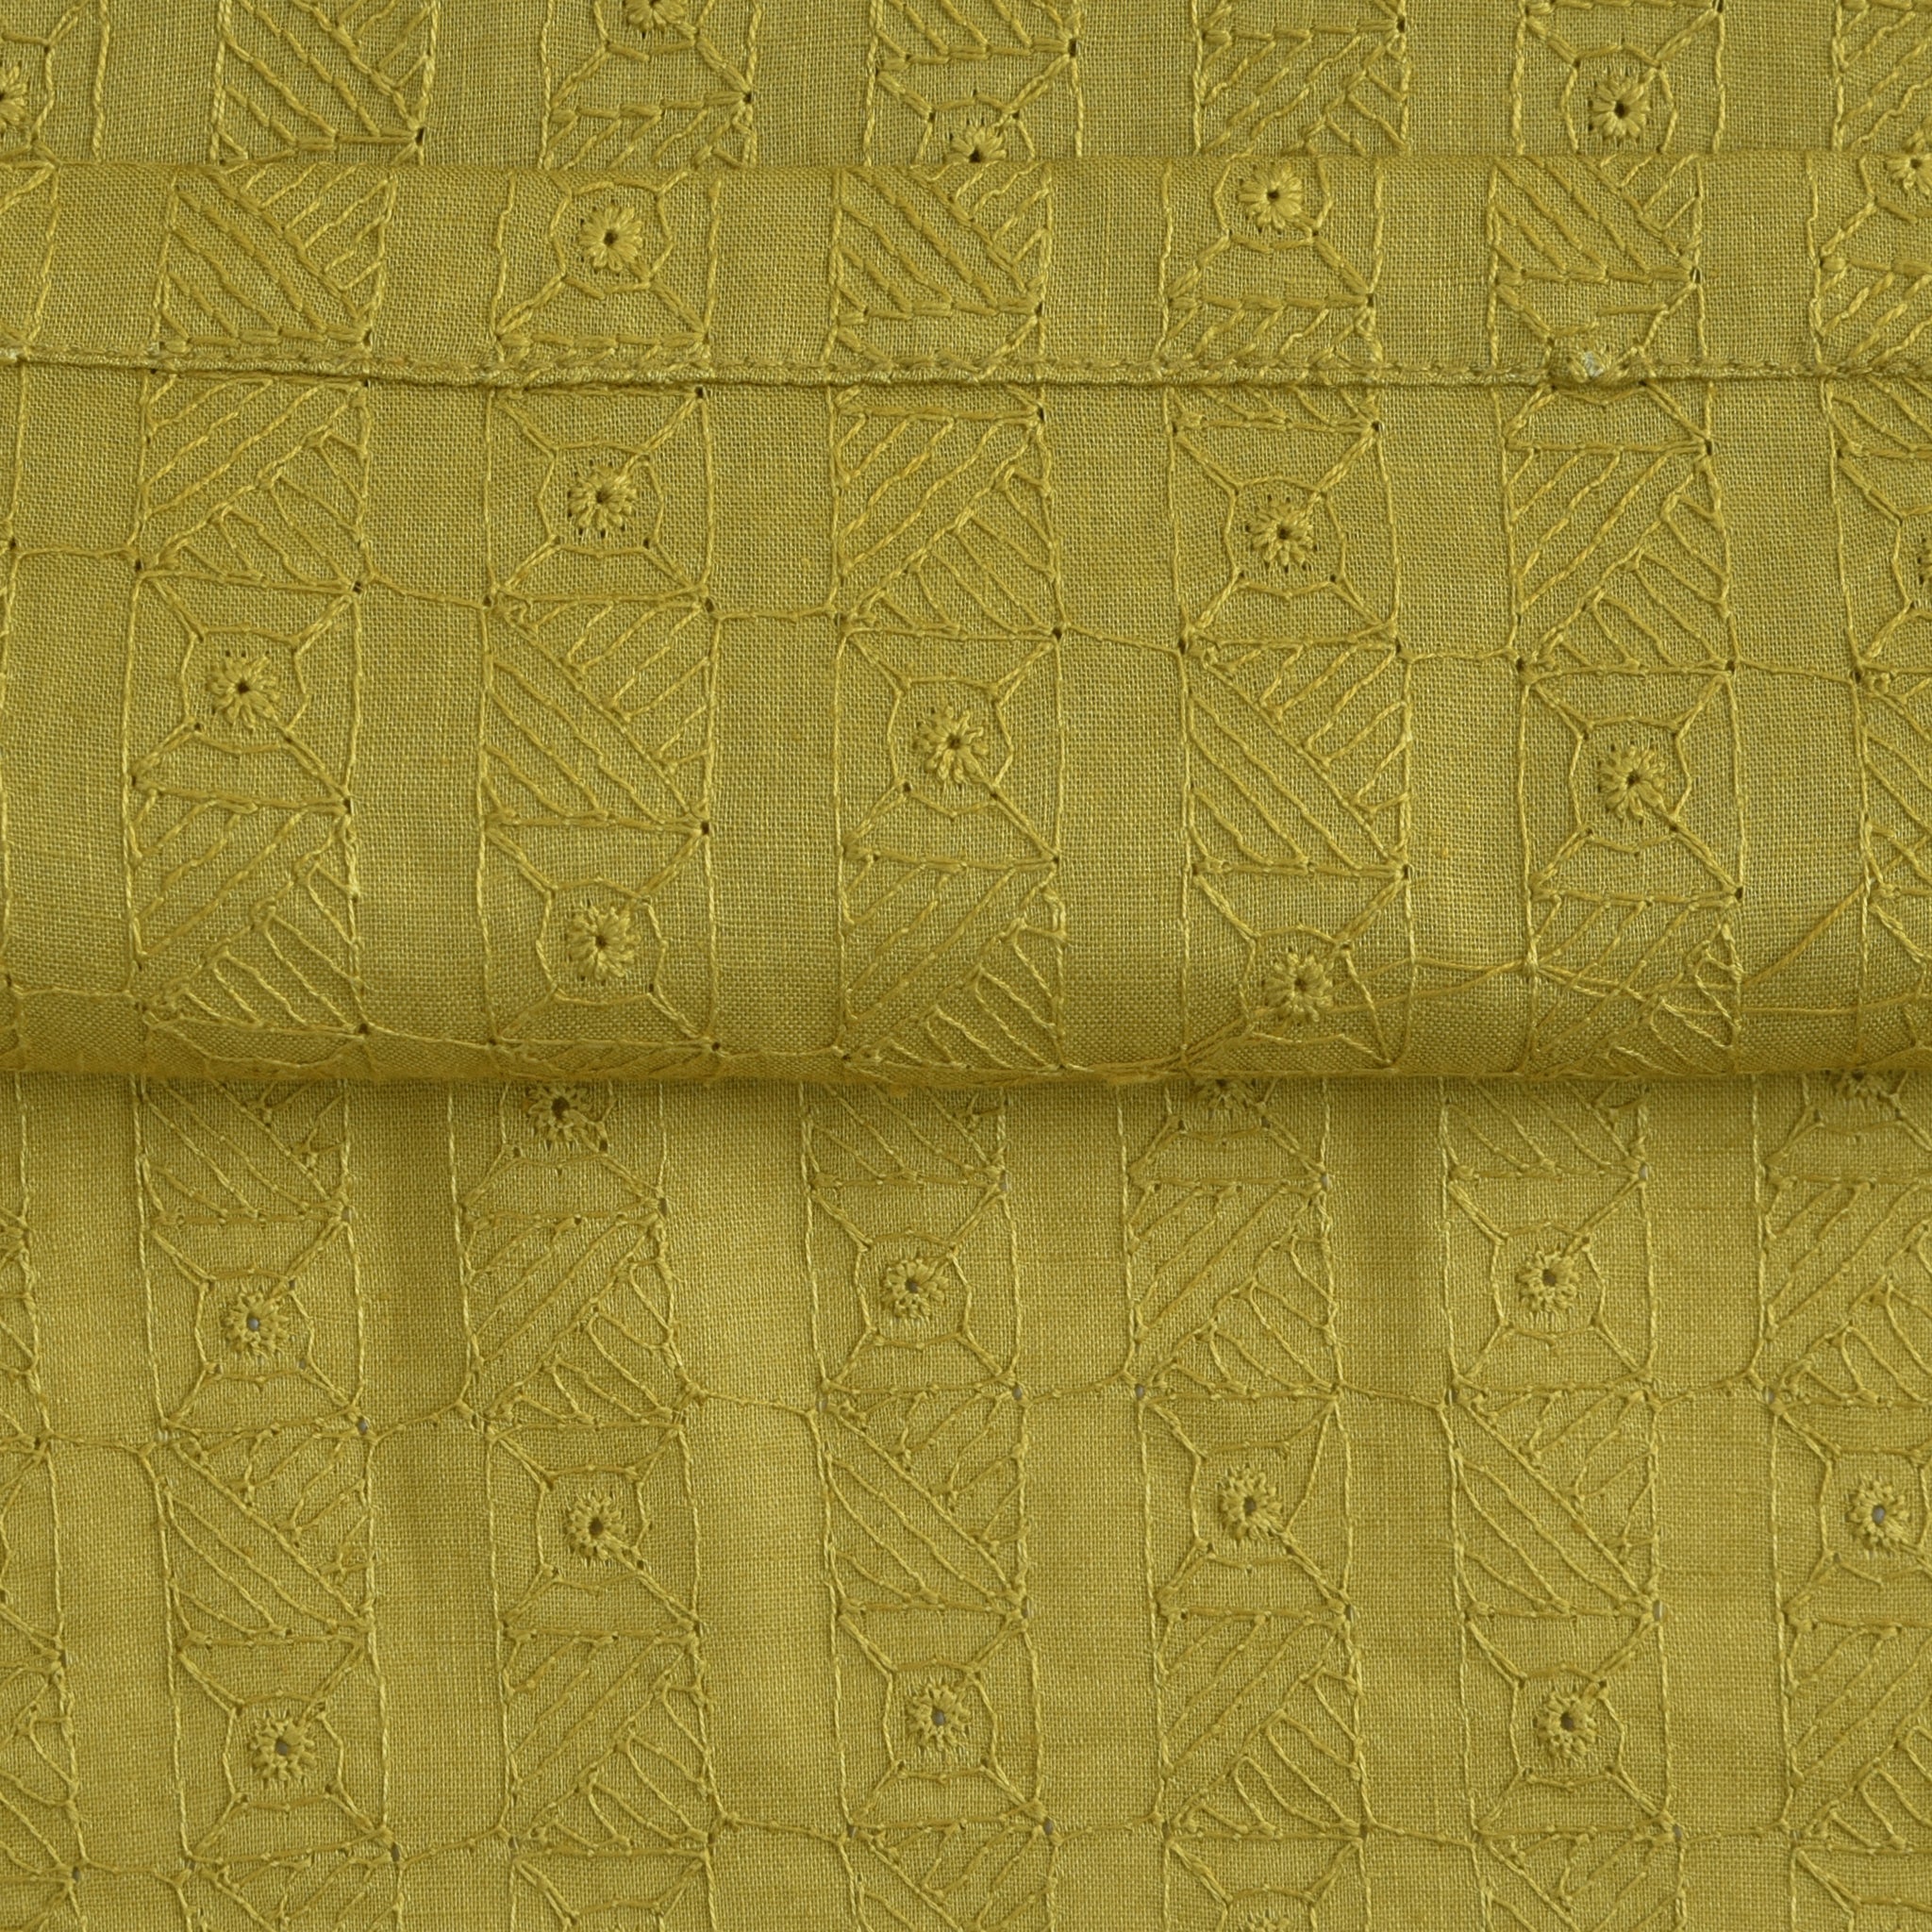 Spring Mustard Embroidered Kurta